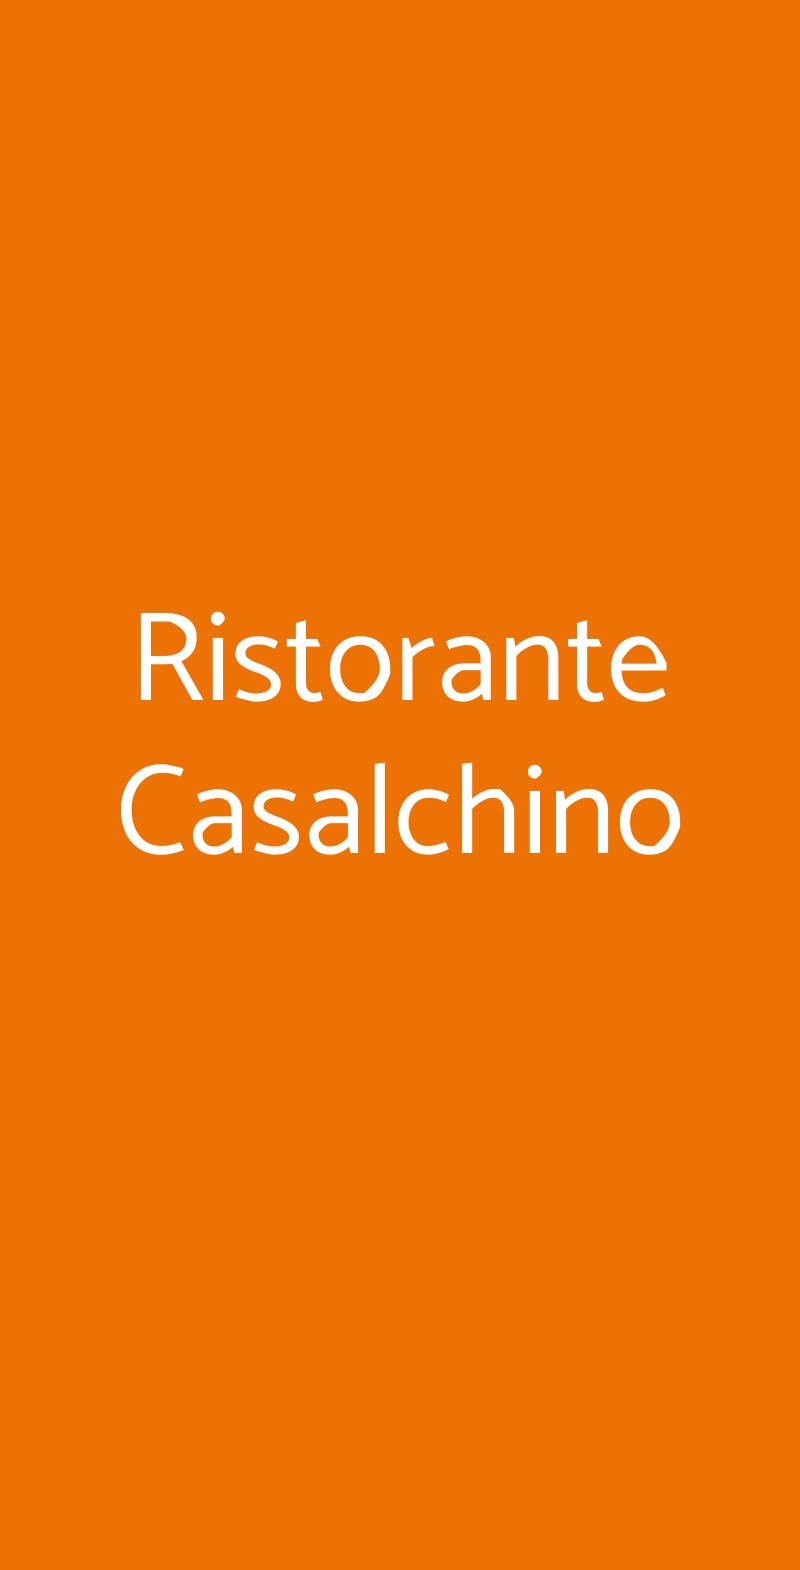 Ristorante Casalchino San Gimignano menù 1 pagina